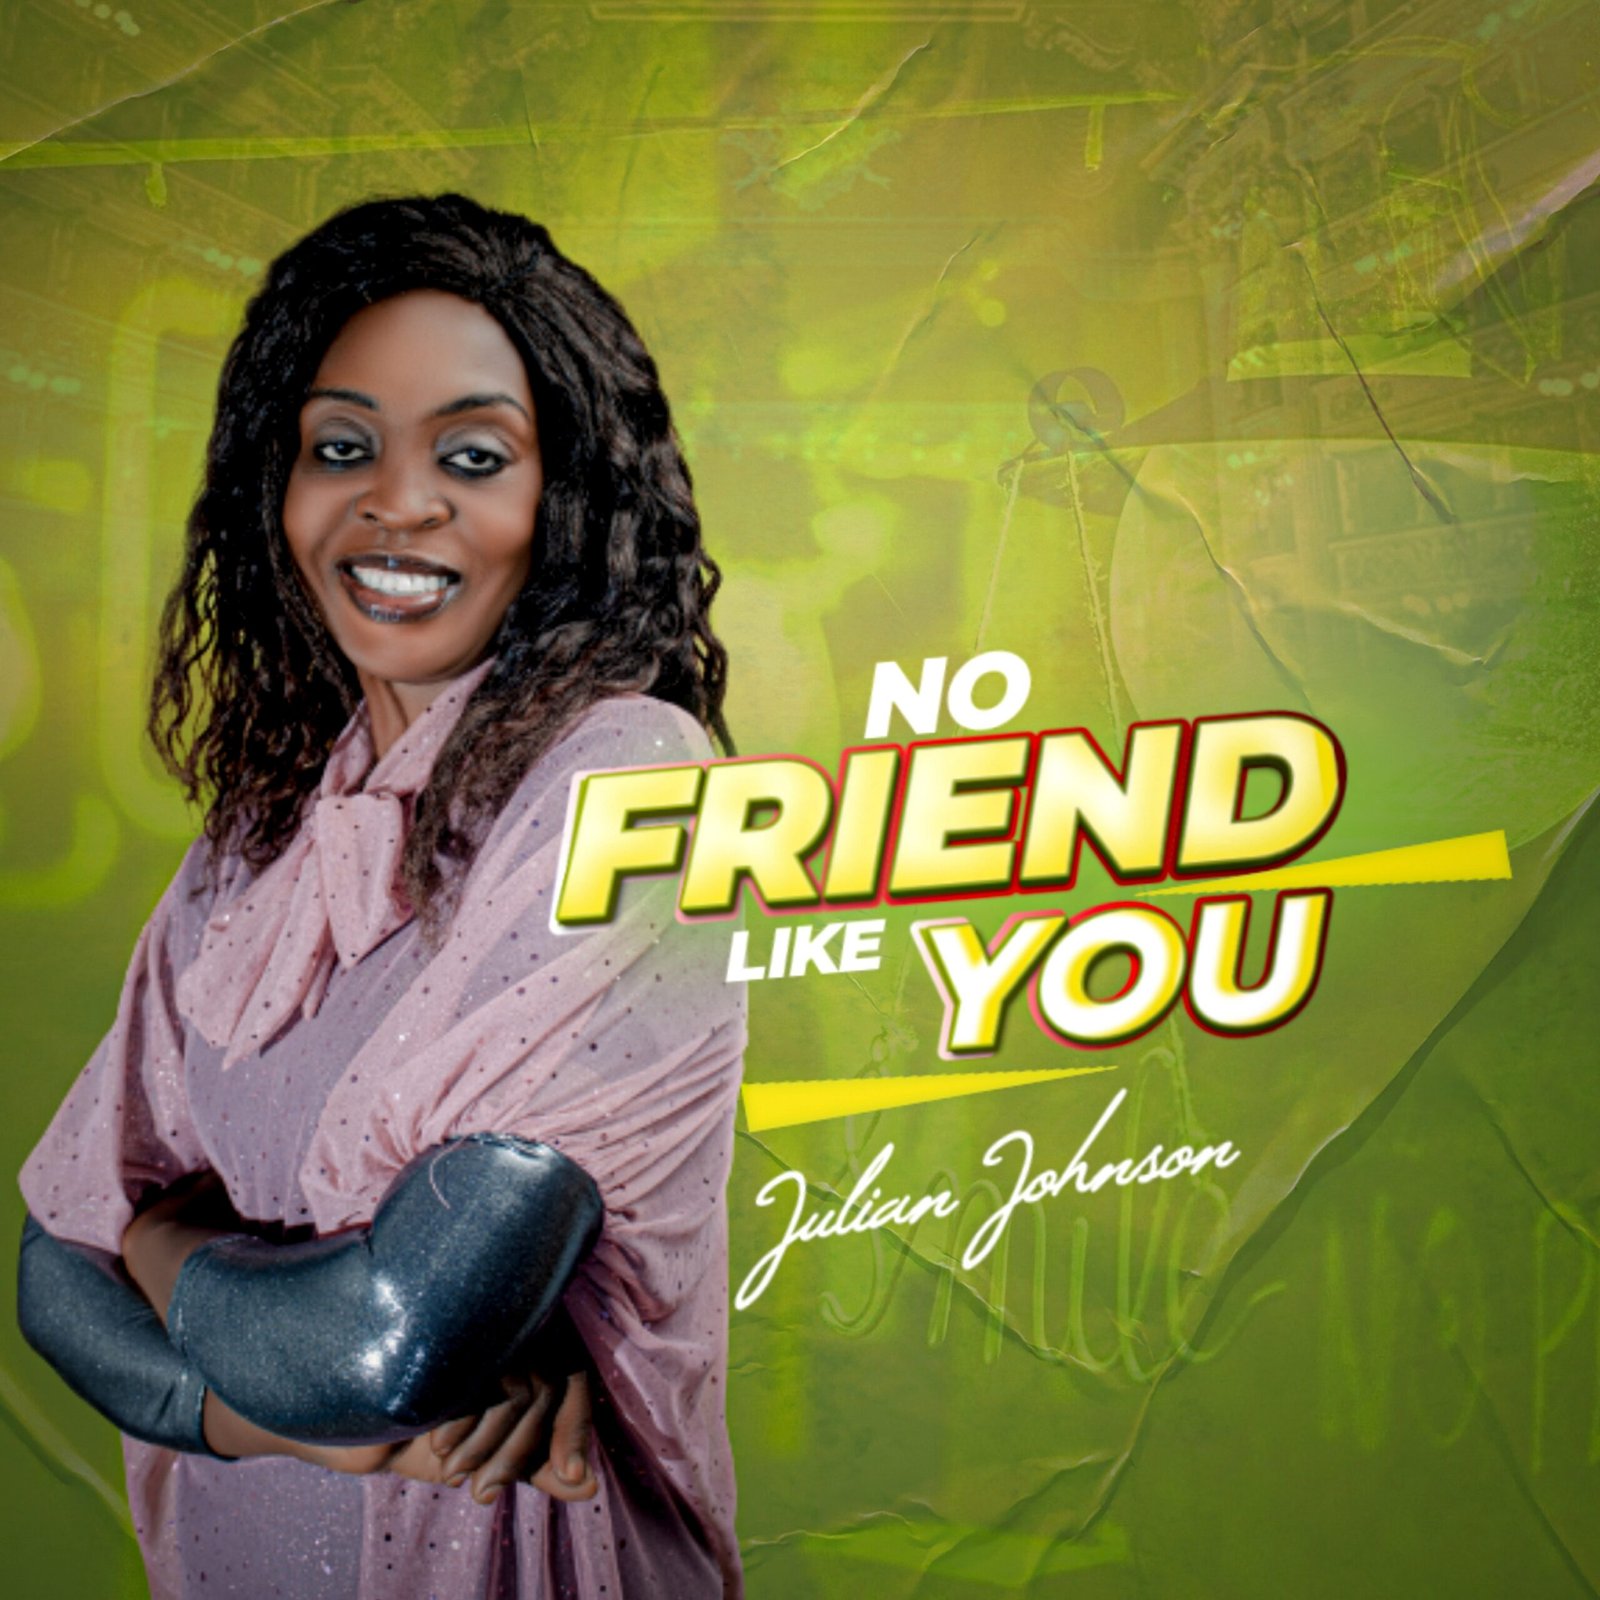 No Friend Like You by Julian Johnson